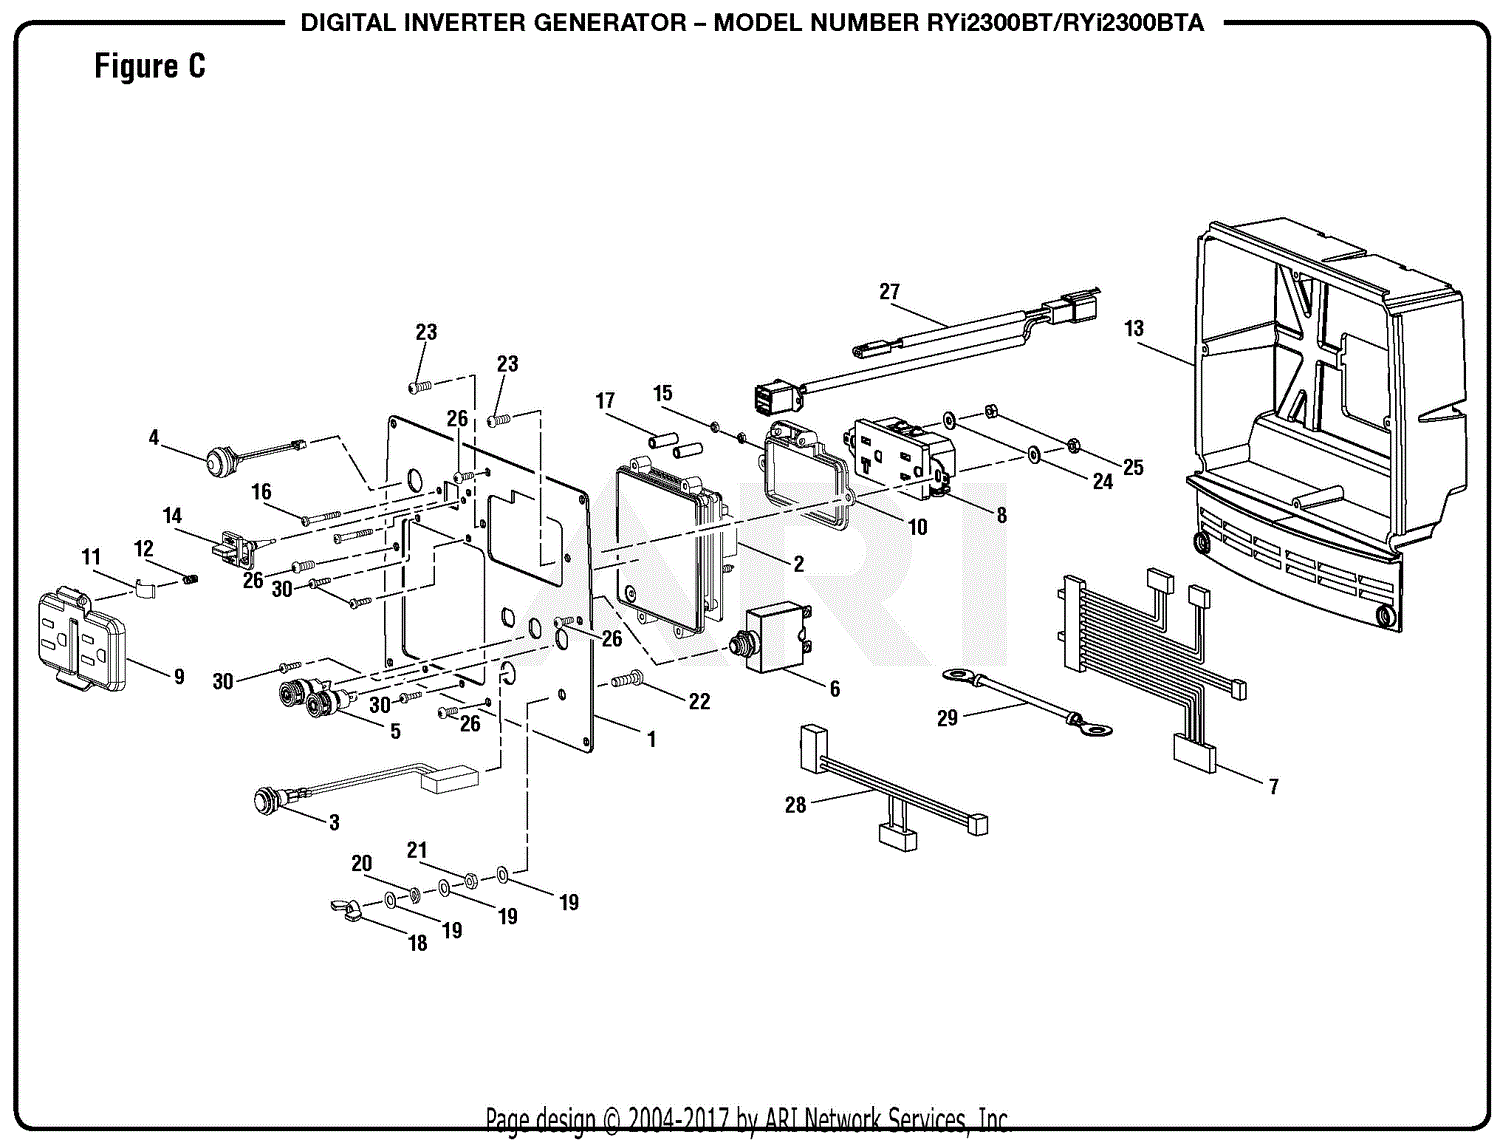 https://az417944.vo.msecnd.net/diagrams/manufacturer/green-machine/ryobi/lawn-and-garden/inverter-generators/ryi2300bt-digital-inverter-generator-mfg-no-090930309-7-14-17-rev-01/figure-c/diagram.gif